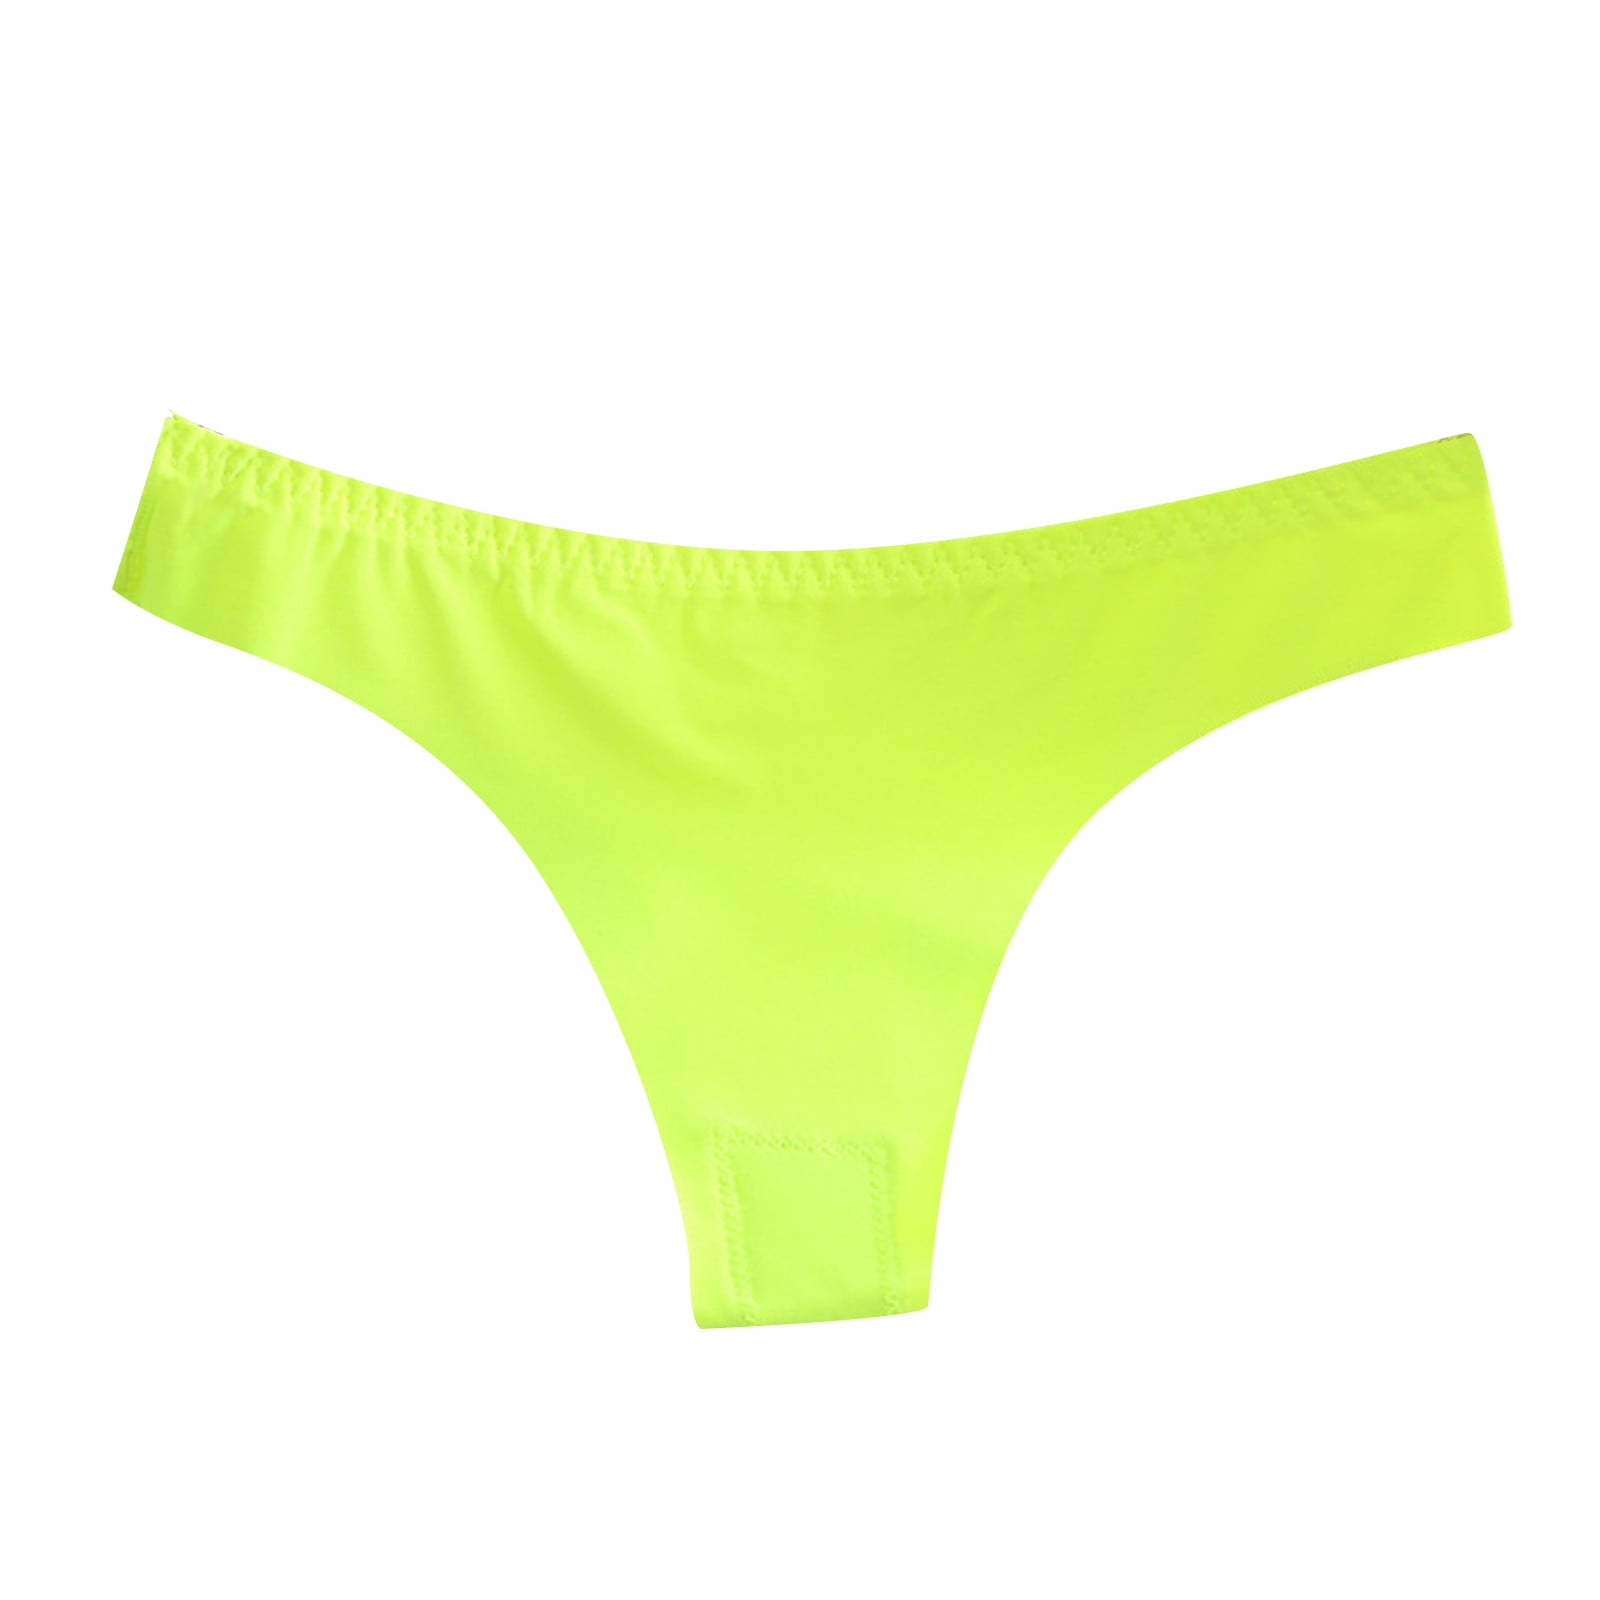 Period Underwear For Women,Women's Seamless Underwear No Show Panties Soft  Stretch Bikini Underwears(M,Army Green) 